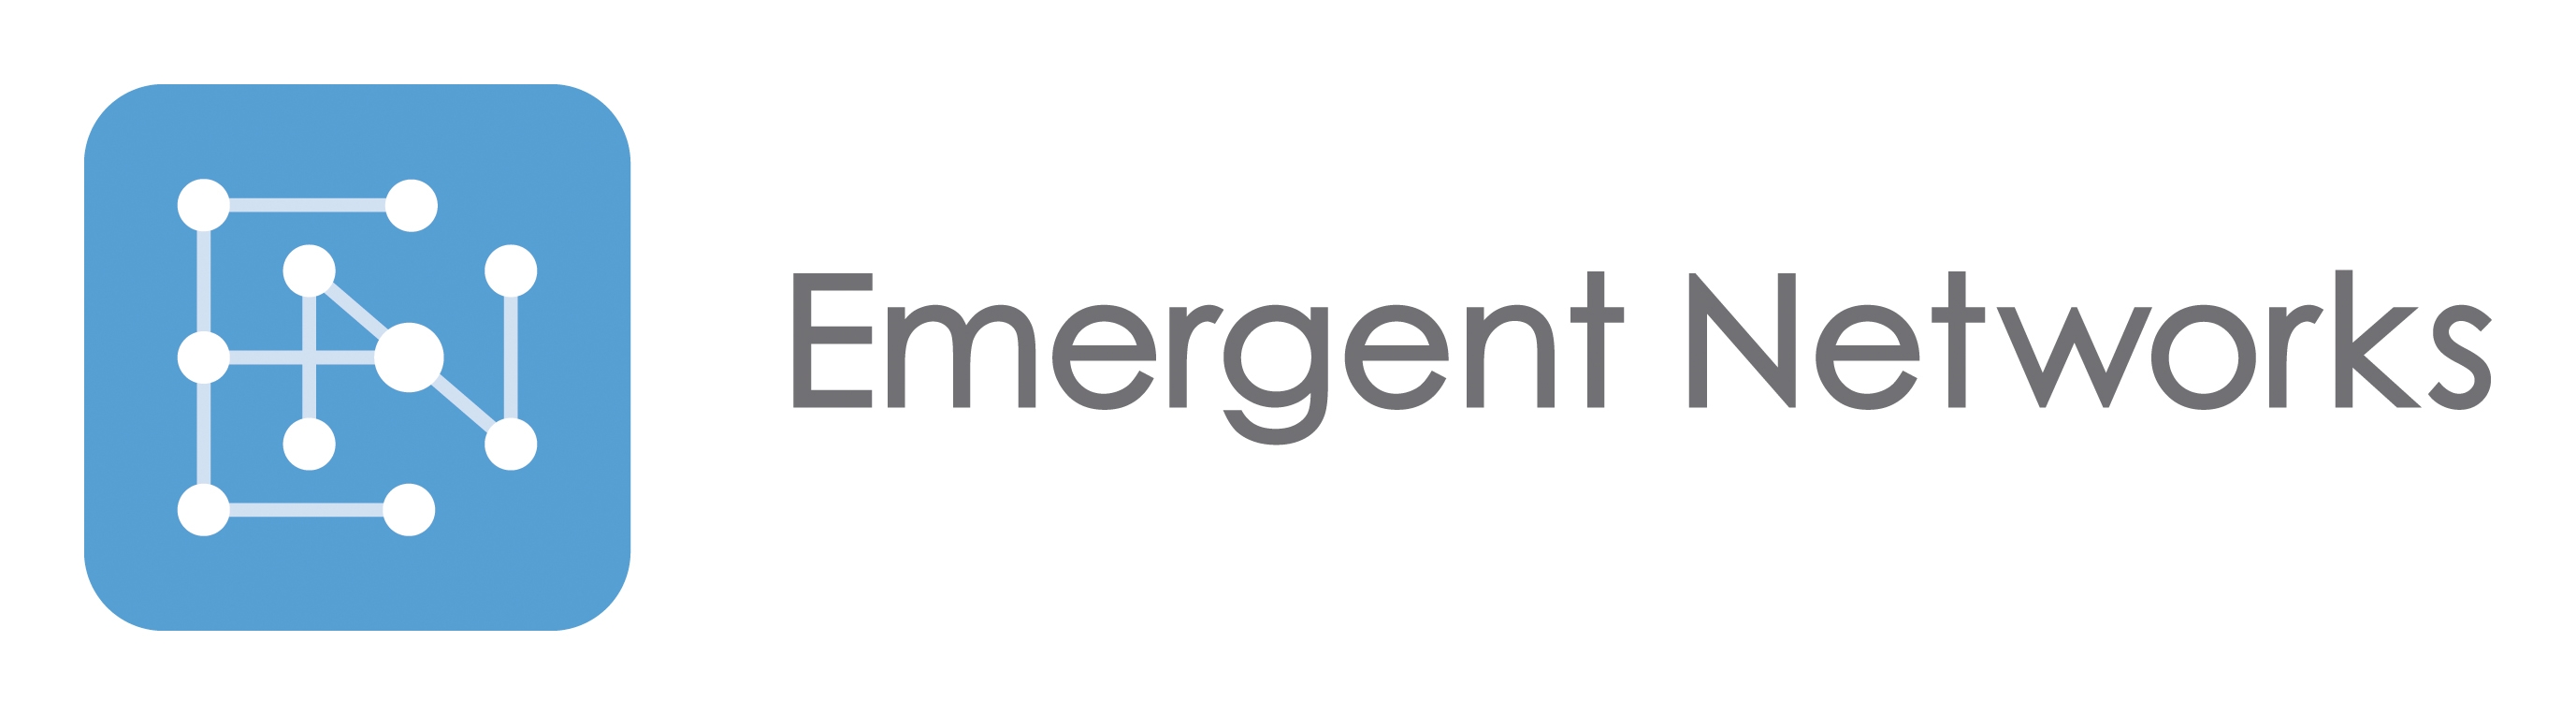 Emergent Networks logo